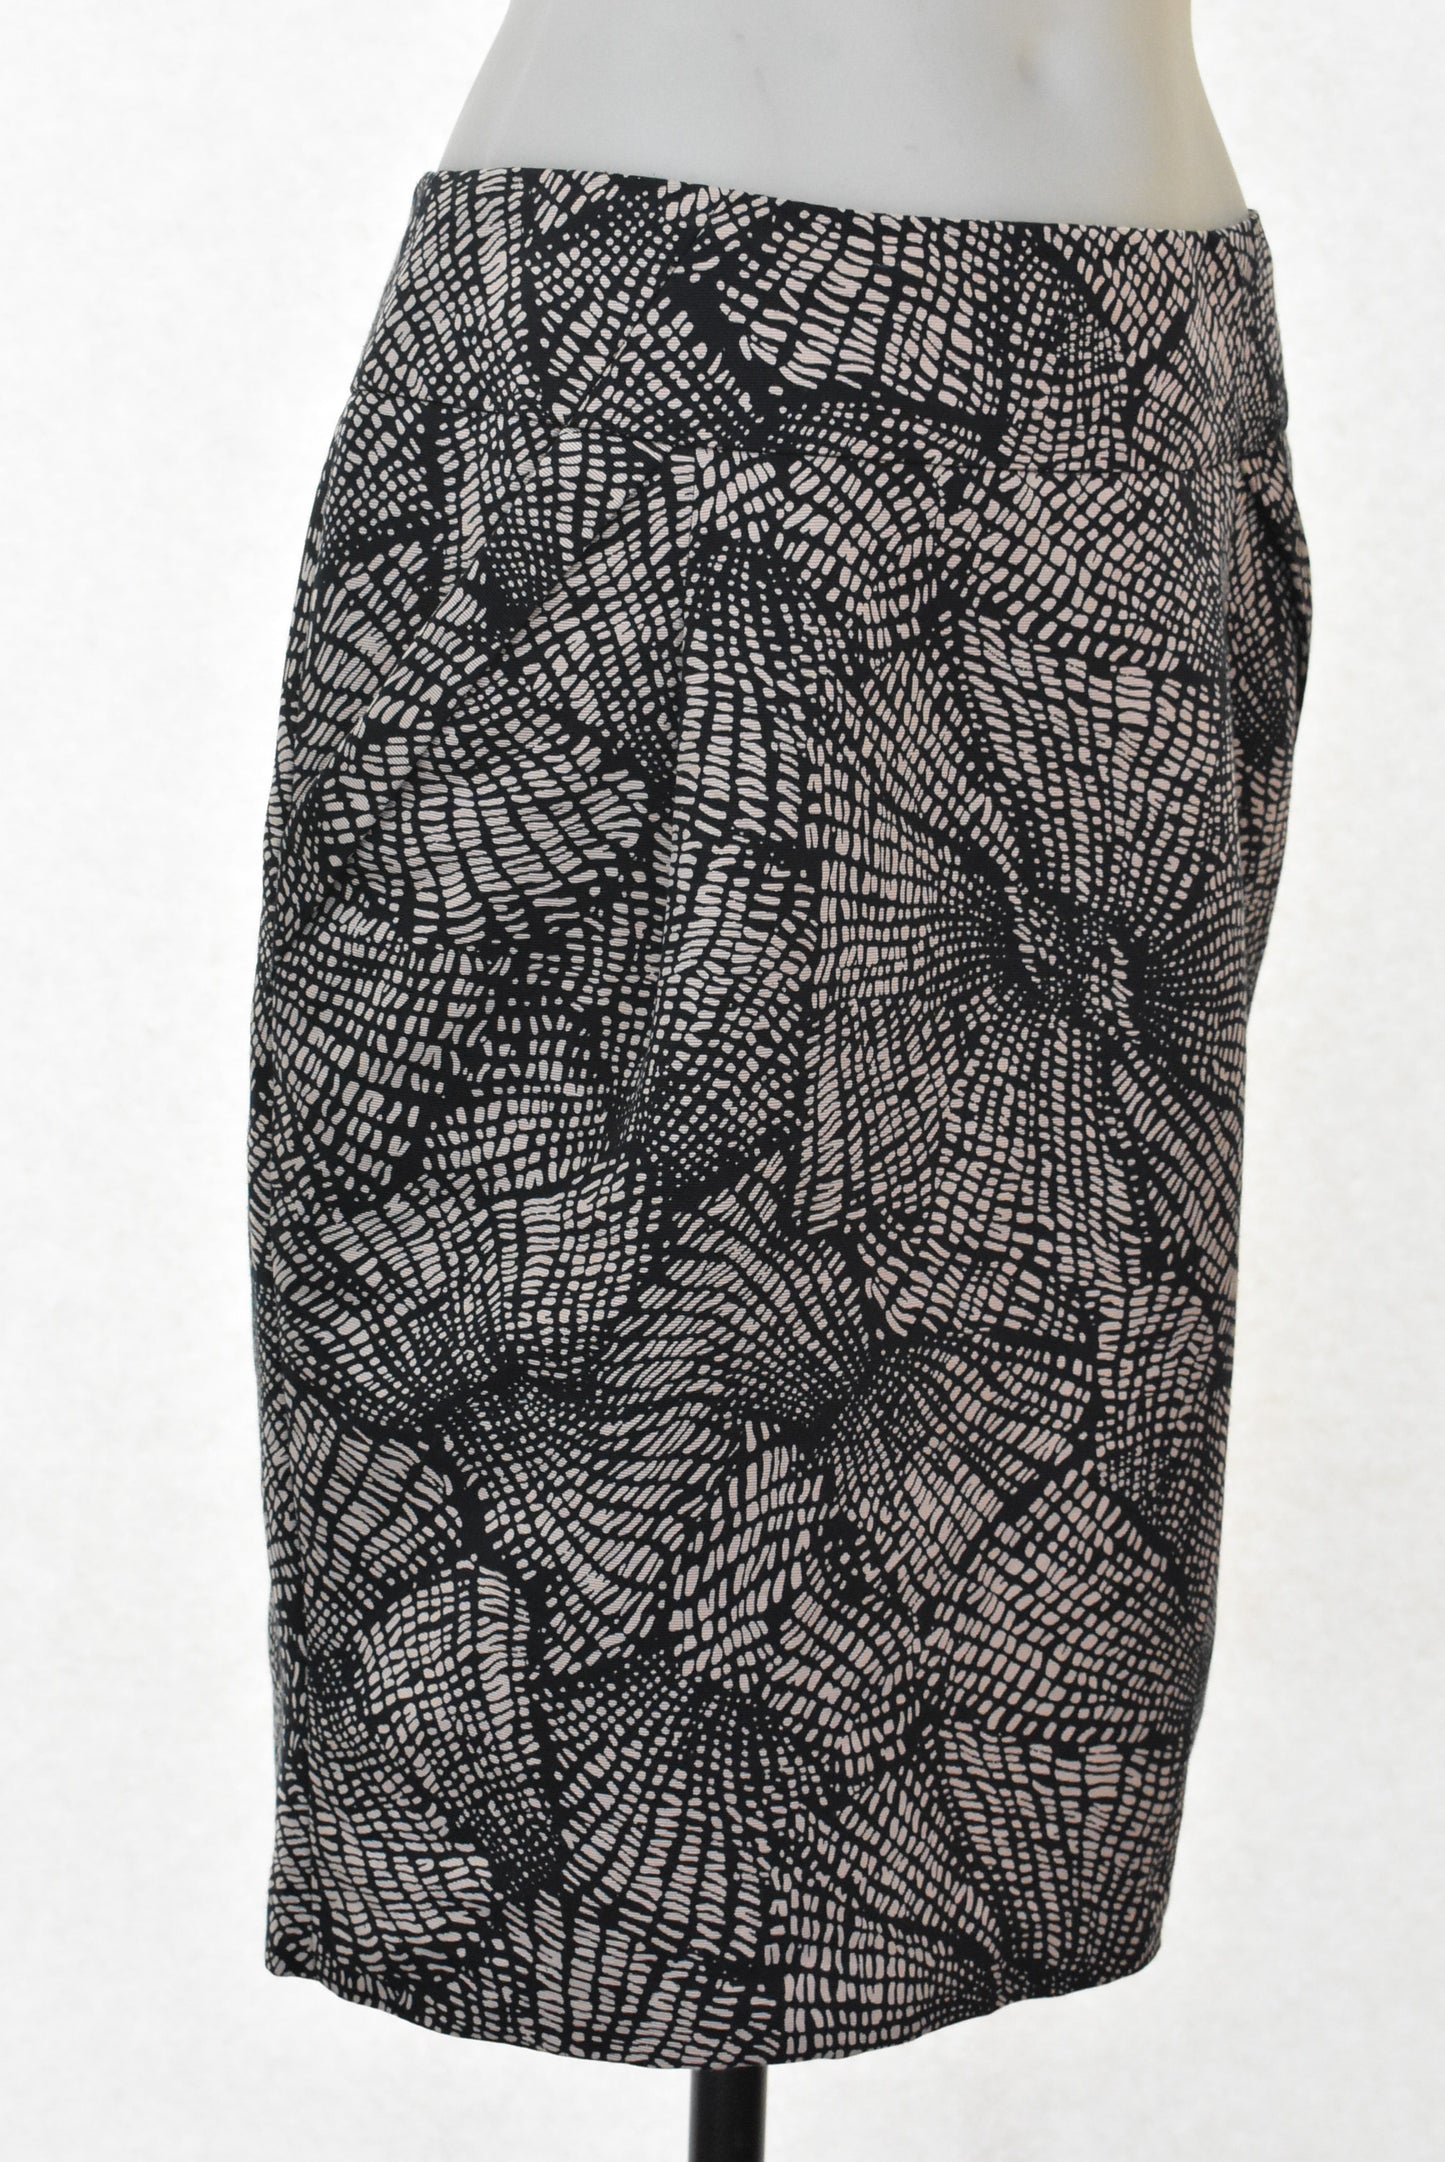 Jacqui E lined mini skirt with pockets, 10